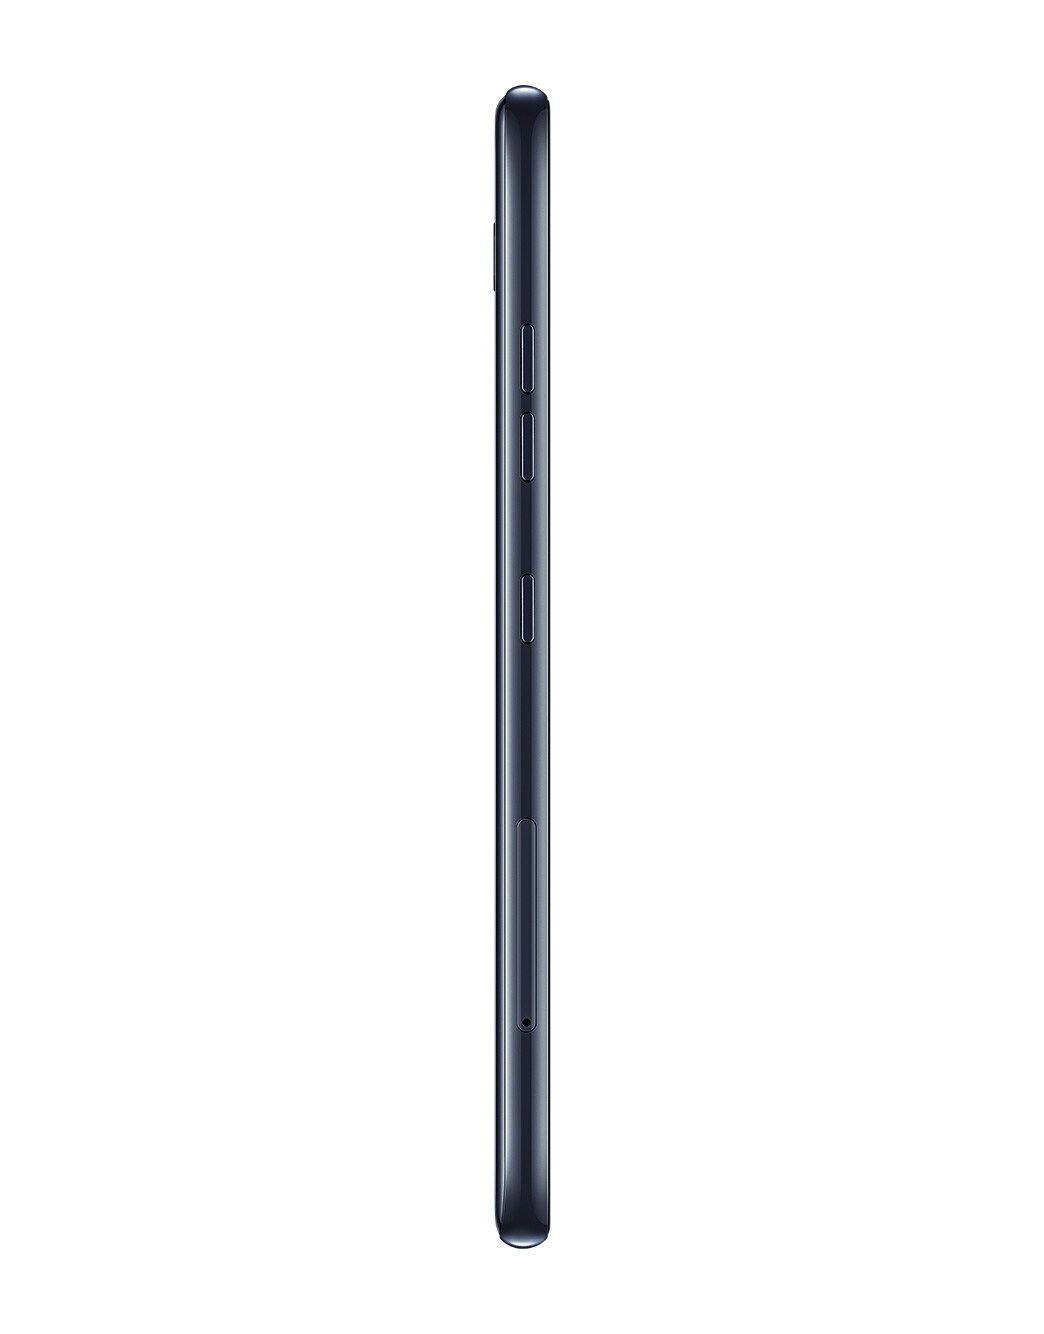 LG K50 Smartphone LMX520ZMW | Mobile Phones | LG Australia